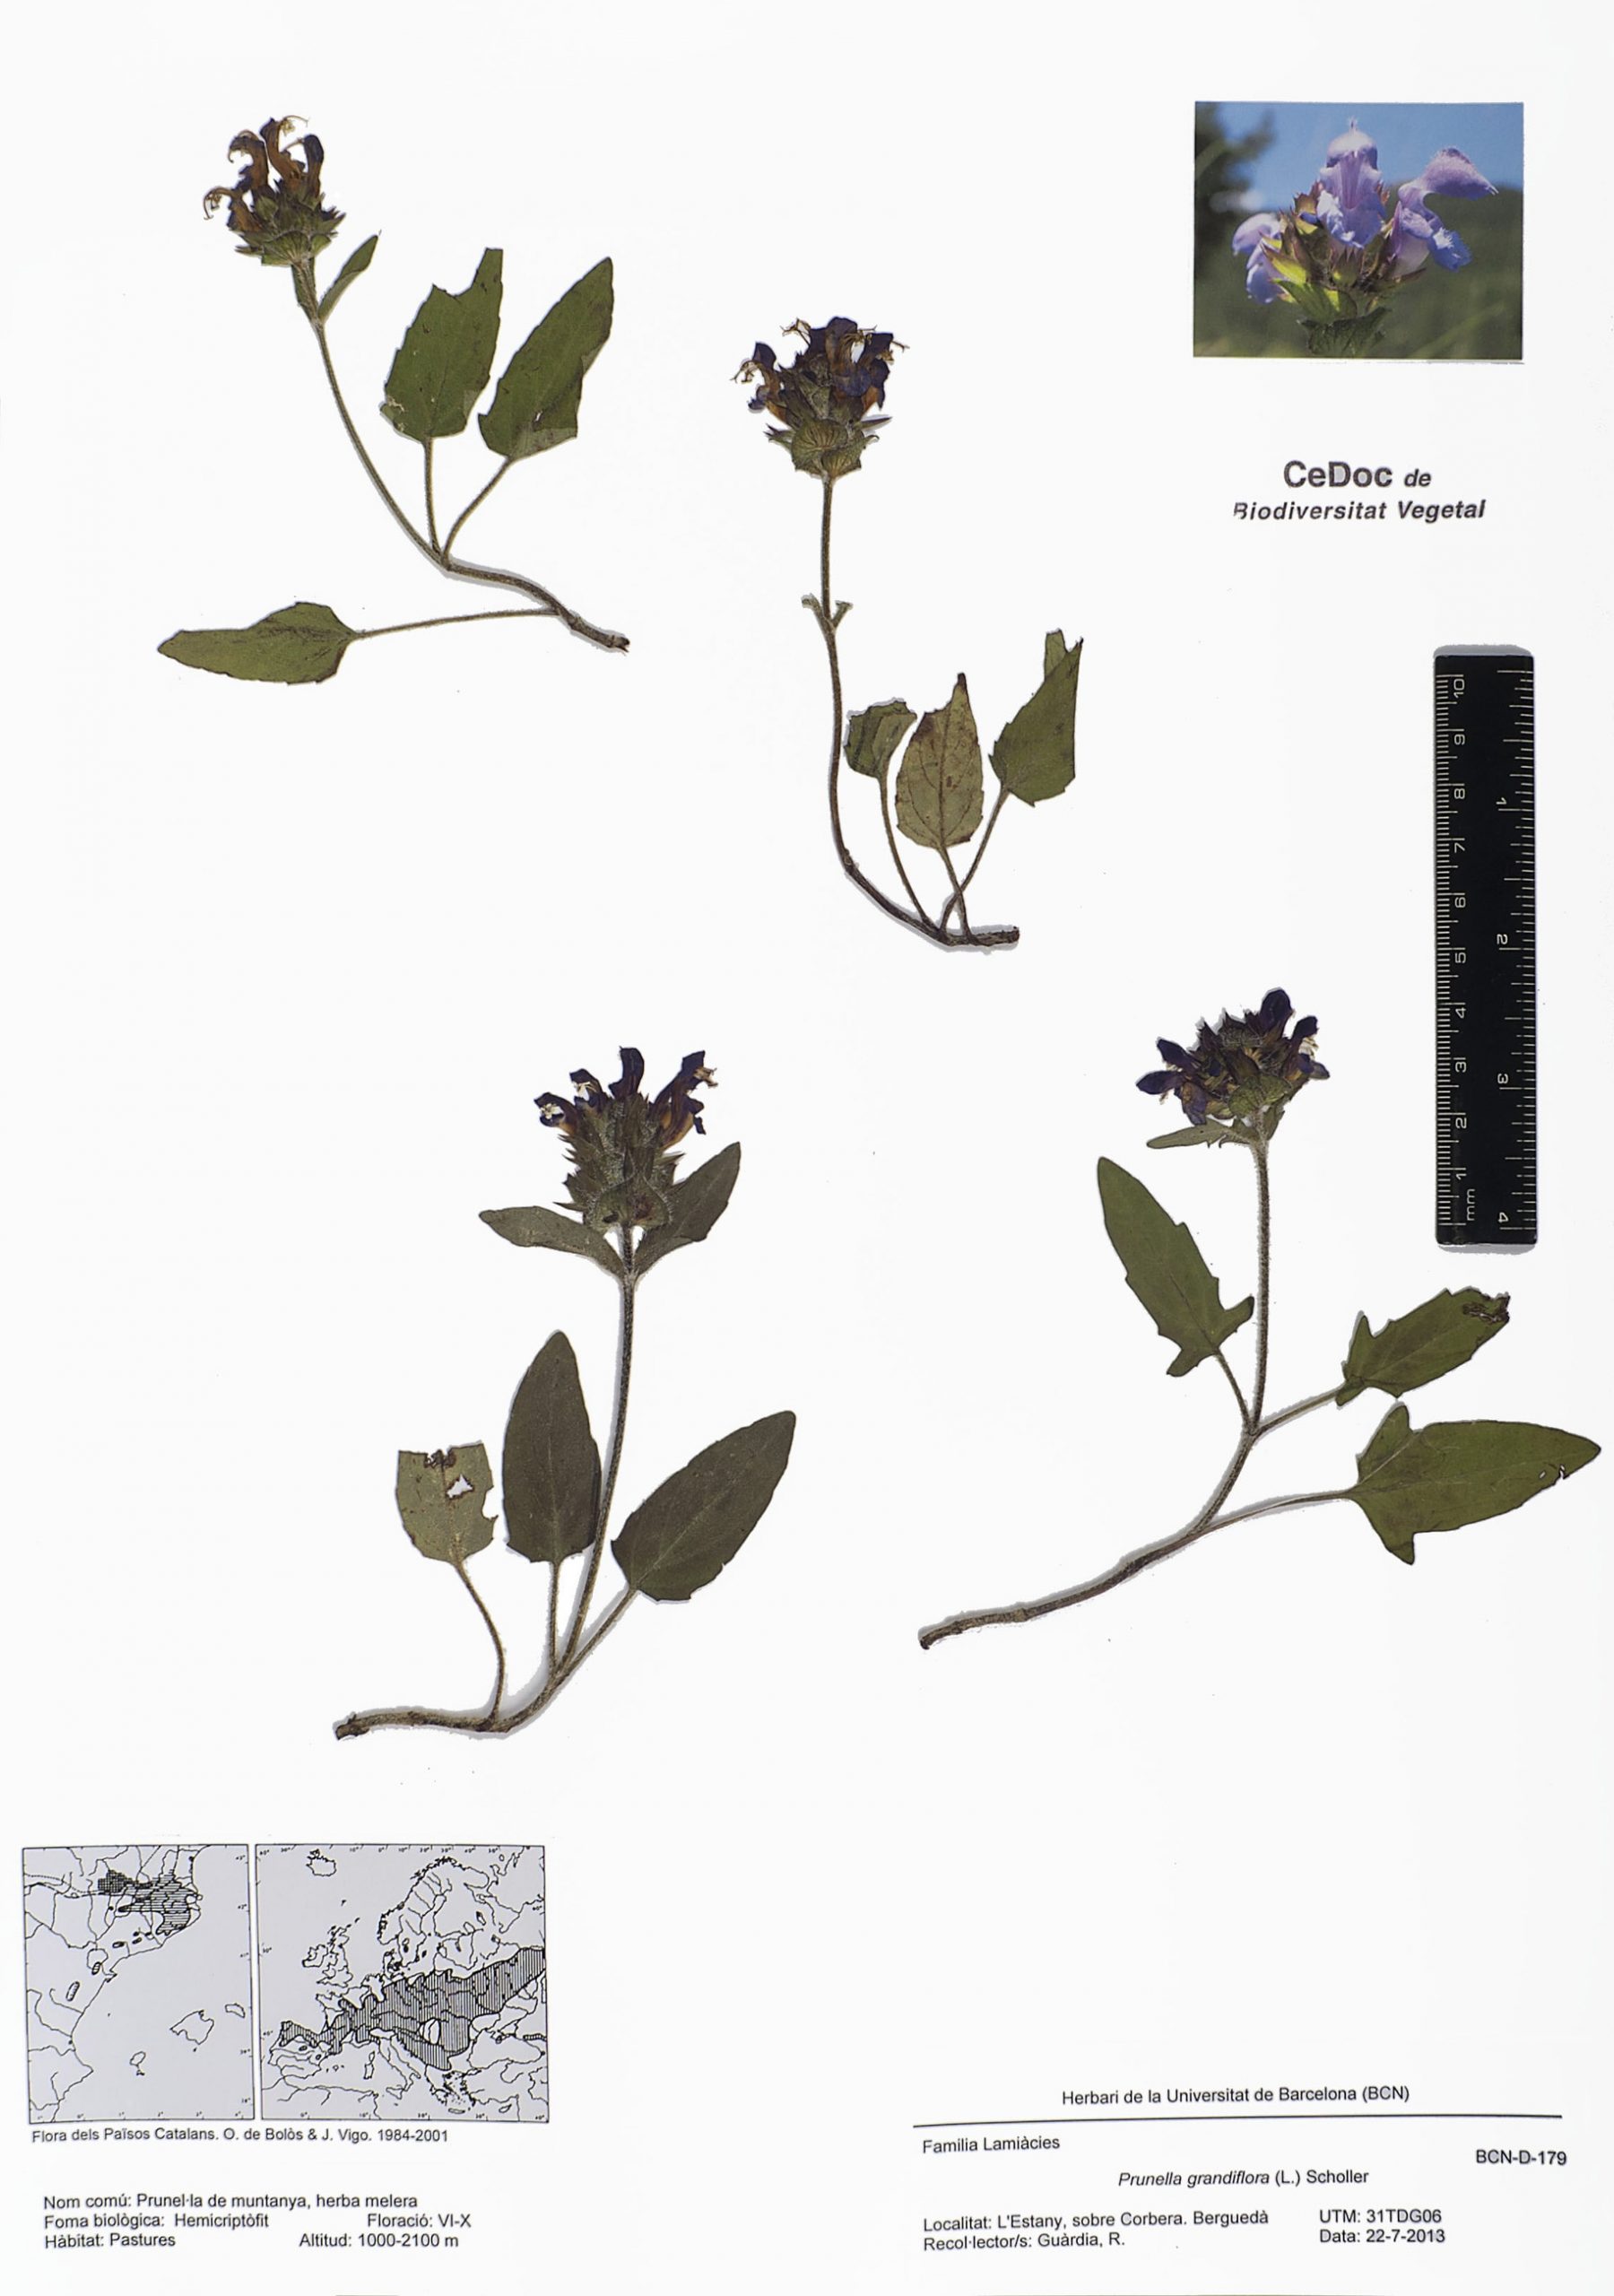 Prunella grandiflora (L.) Scholler (Prunel·la de muntanya, herba melera)